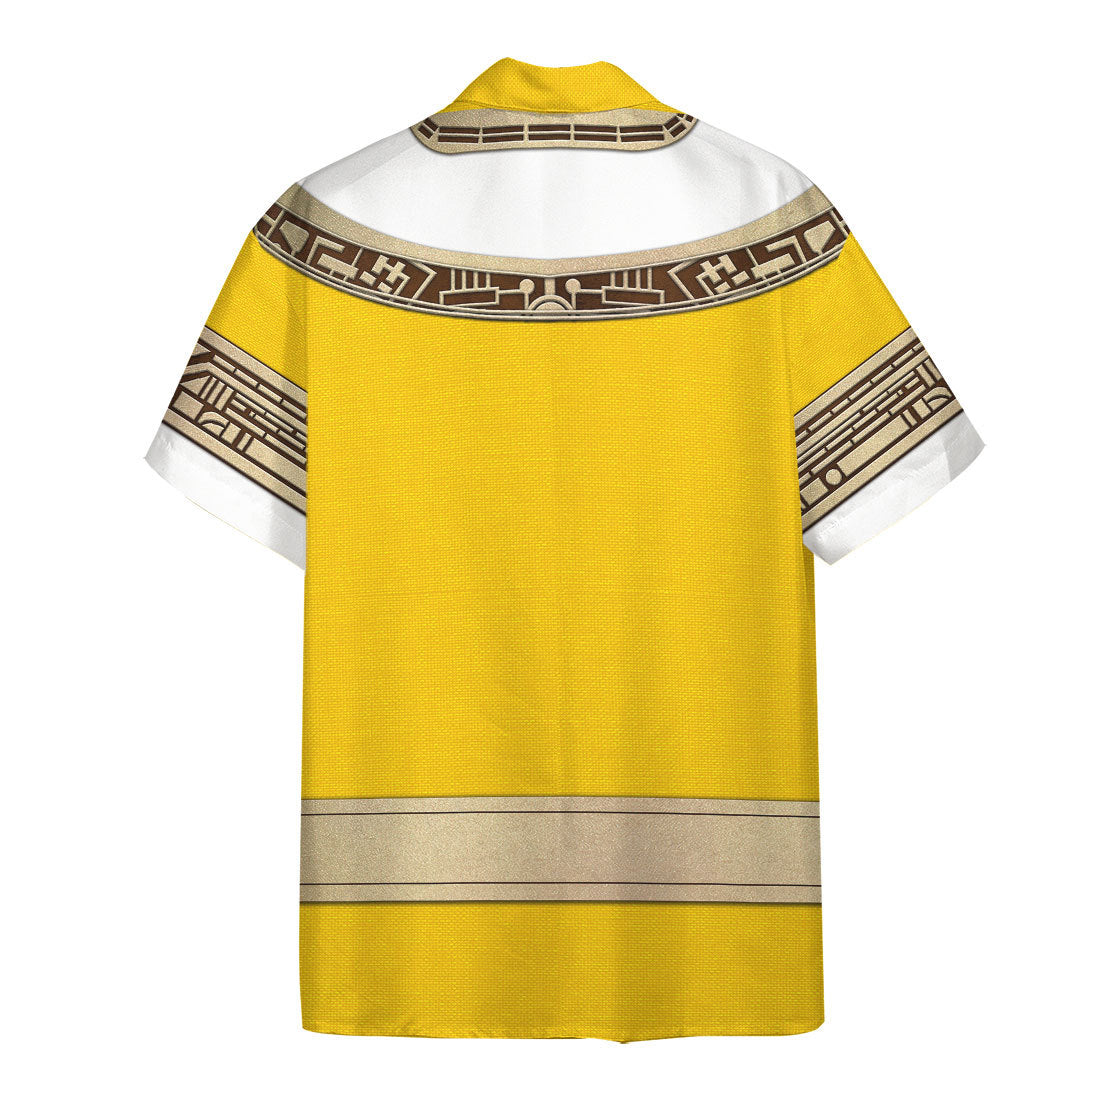 Power Ranger Zeo Yellow Hawaii Shirt 1